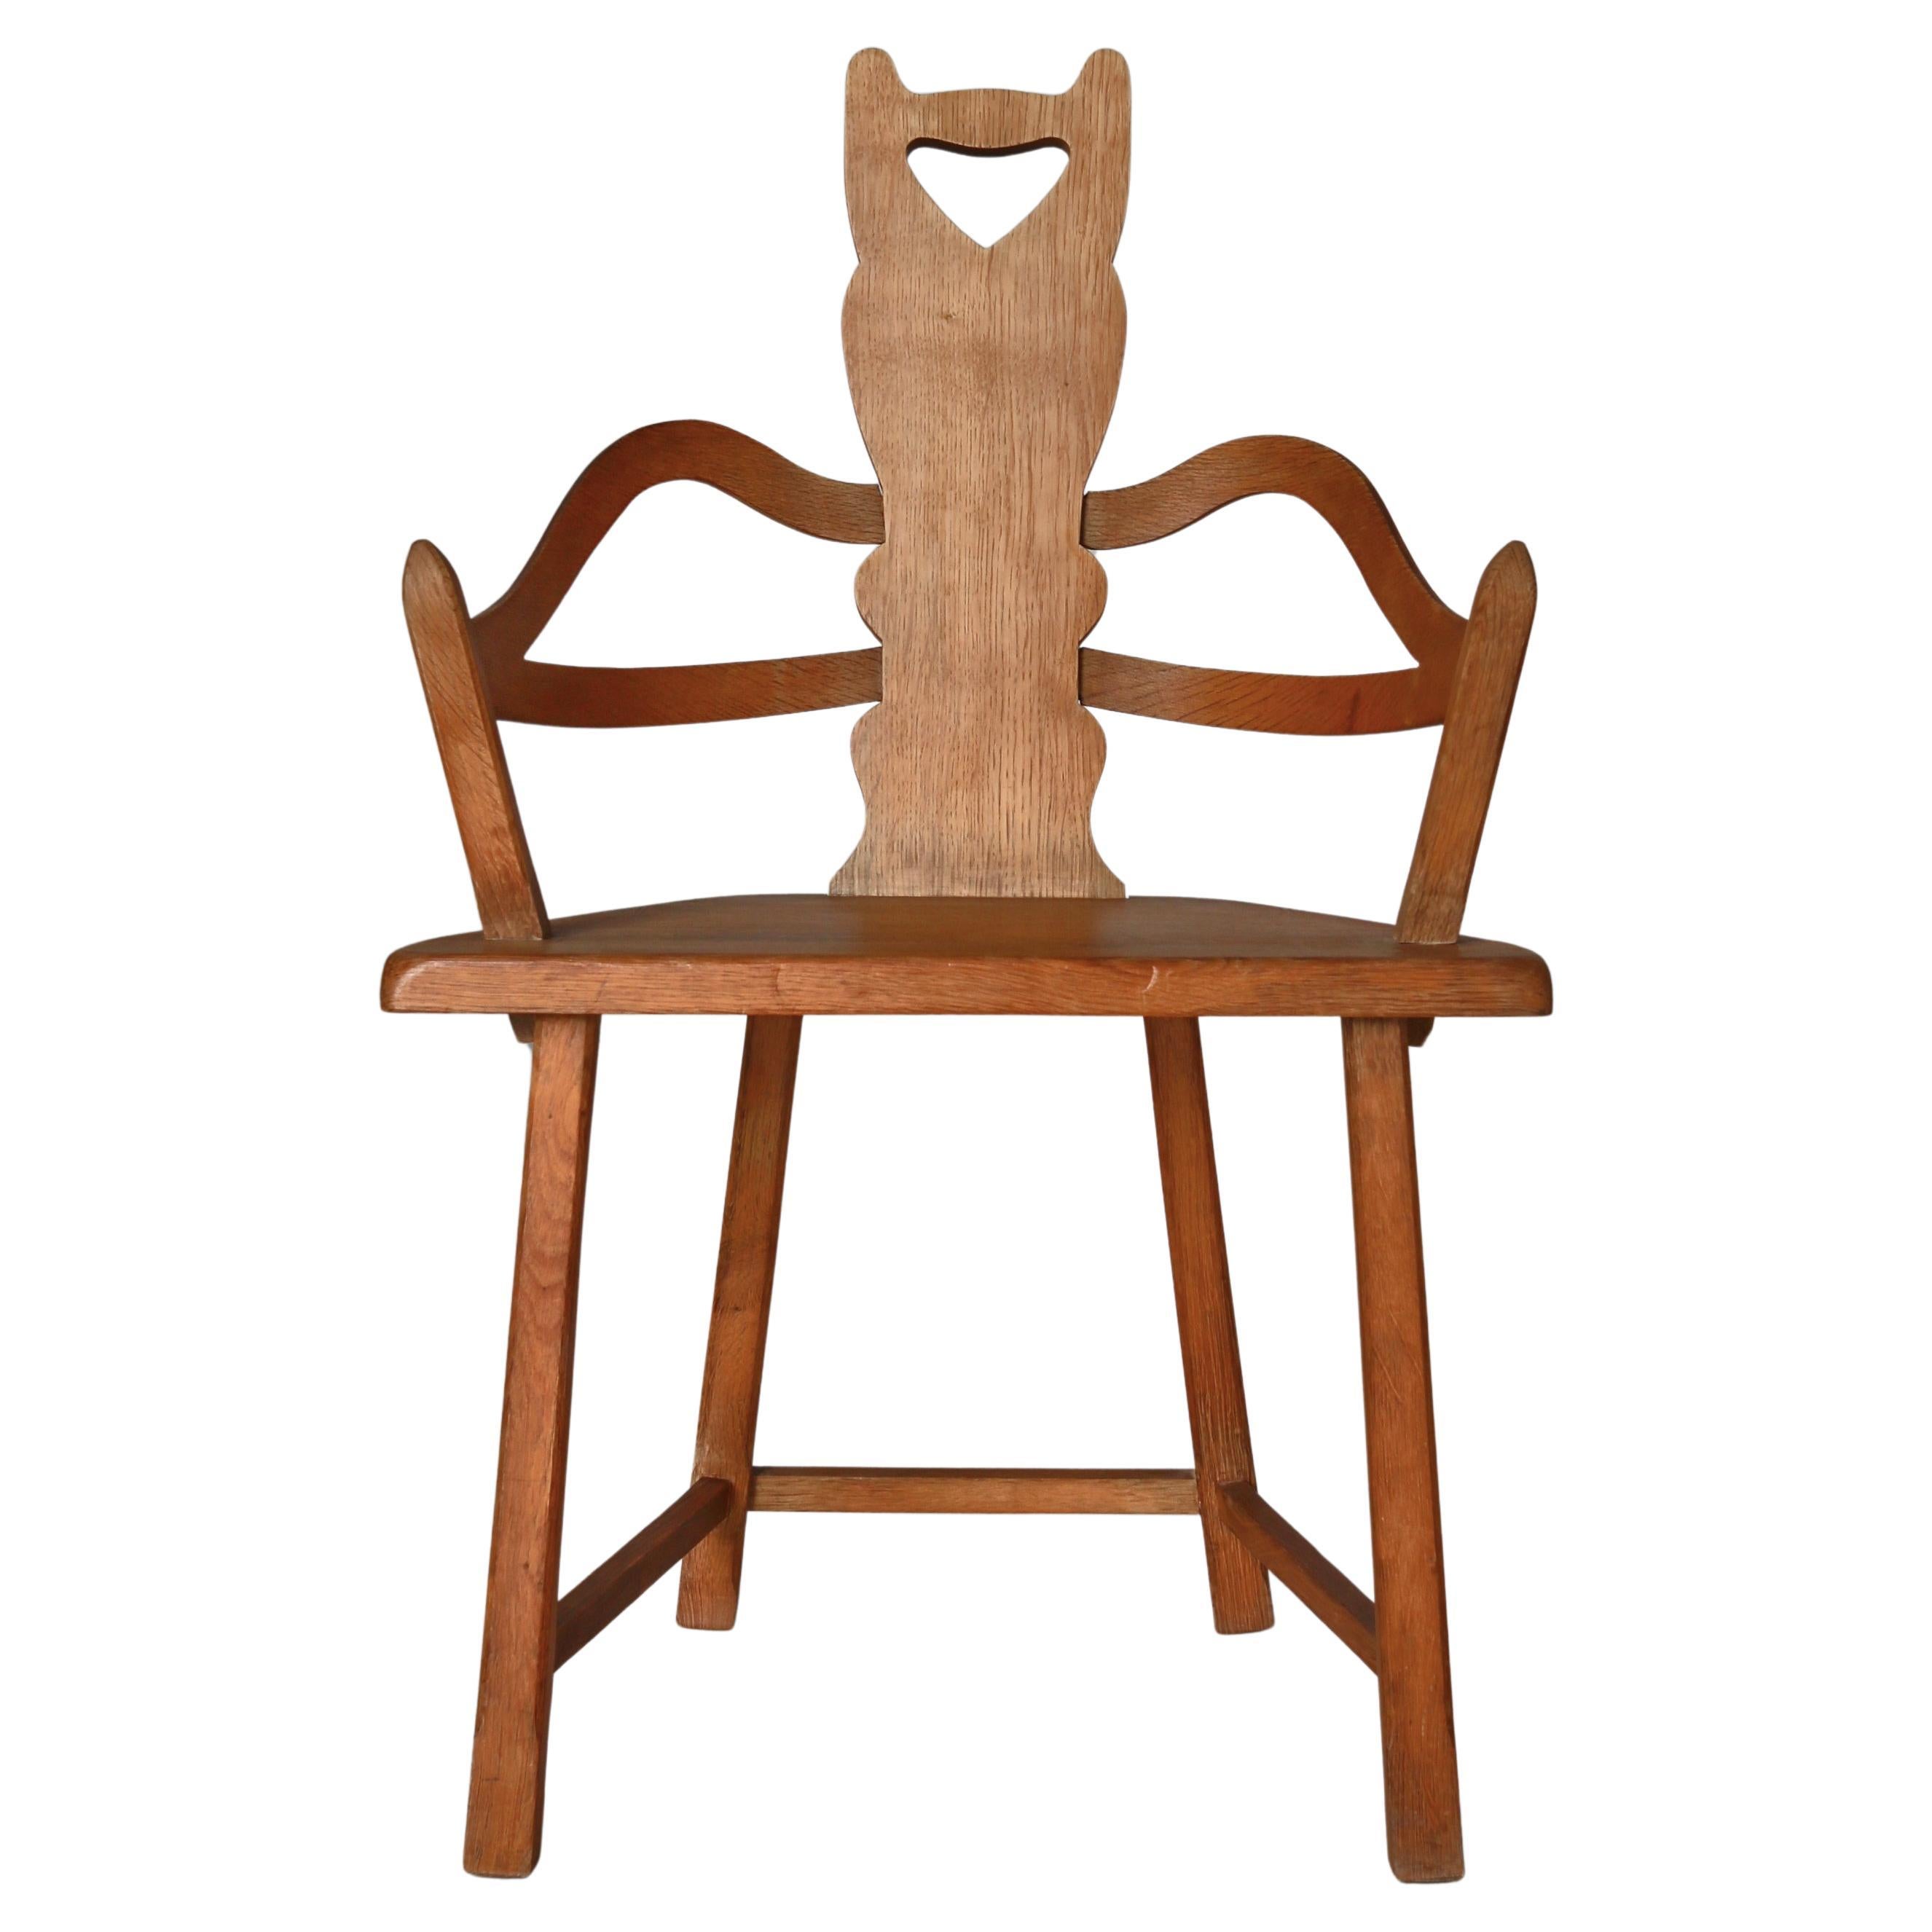 Swedish Folk Art Chair Handmade in Oakwood, 1900s